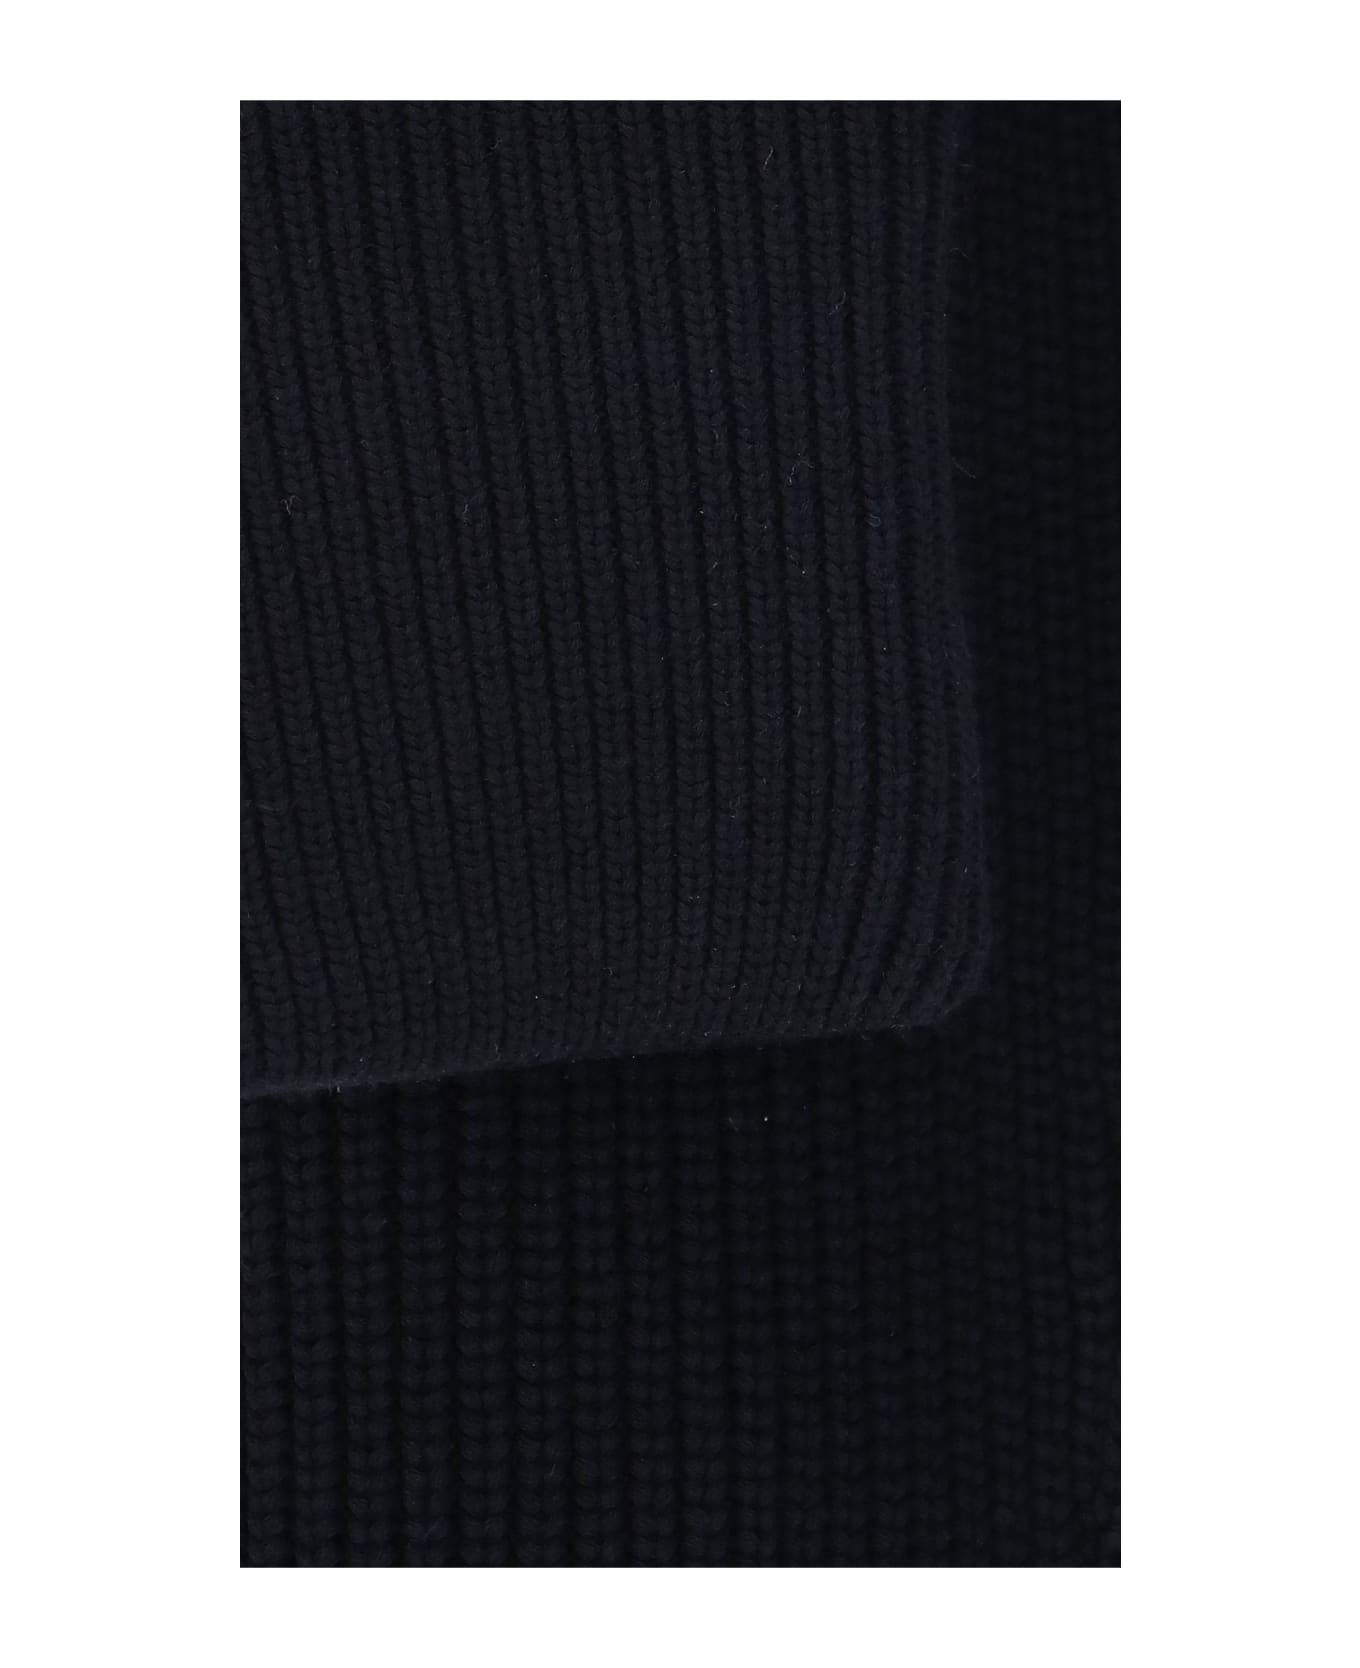 Moncler Genius X 1017 Alyx 9sm Knitwear Bottoms - BLACK